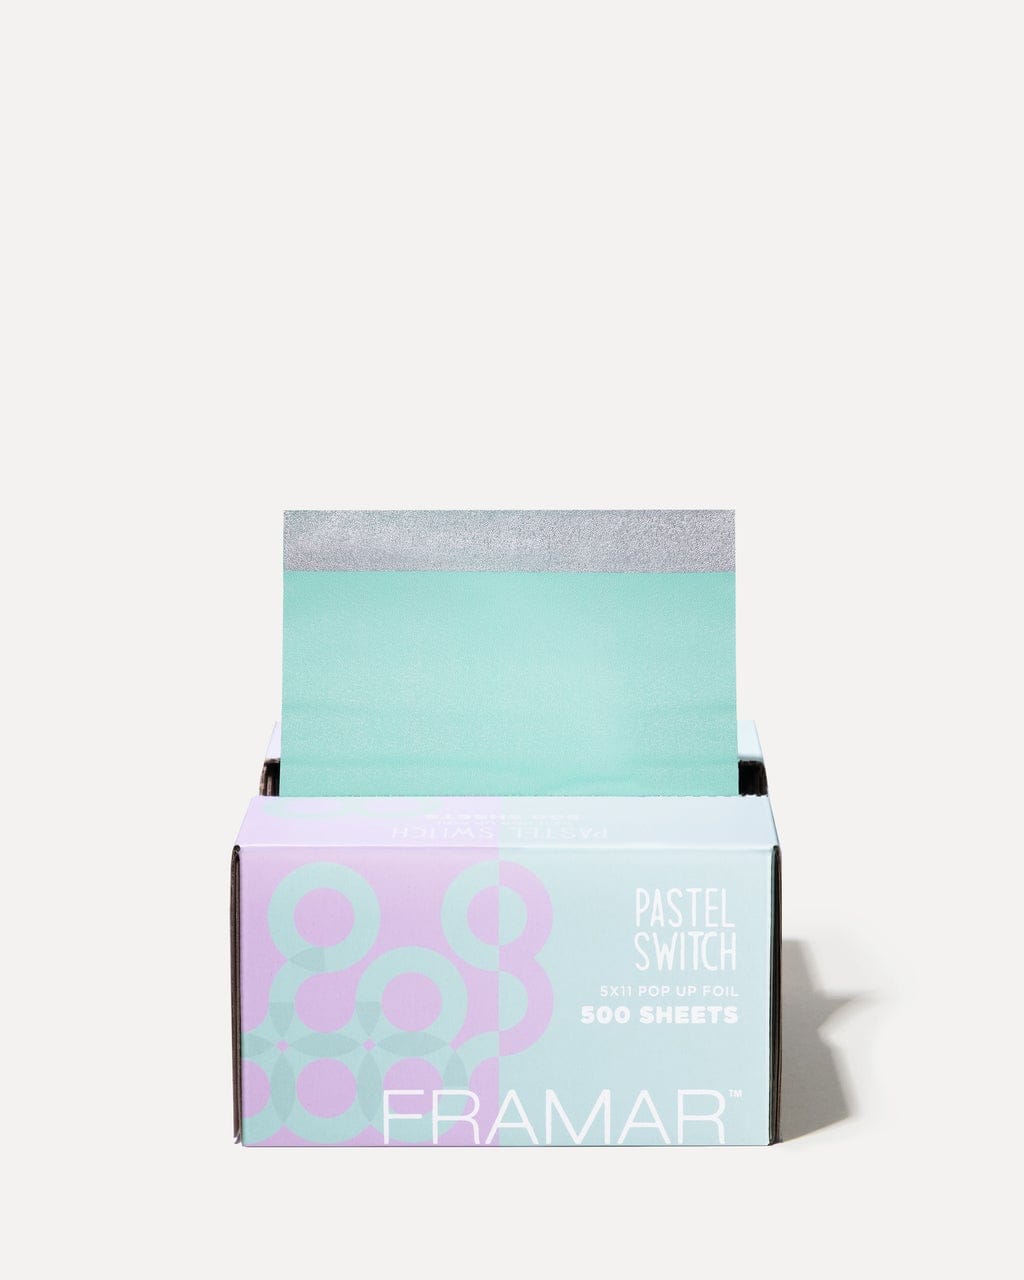 NEW! Framar Pastel Switch - Pop Up foil 500 sheets, 12,7 cm x 27,9